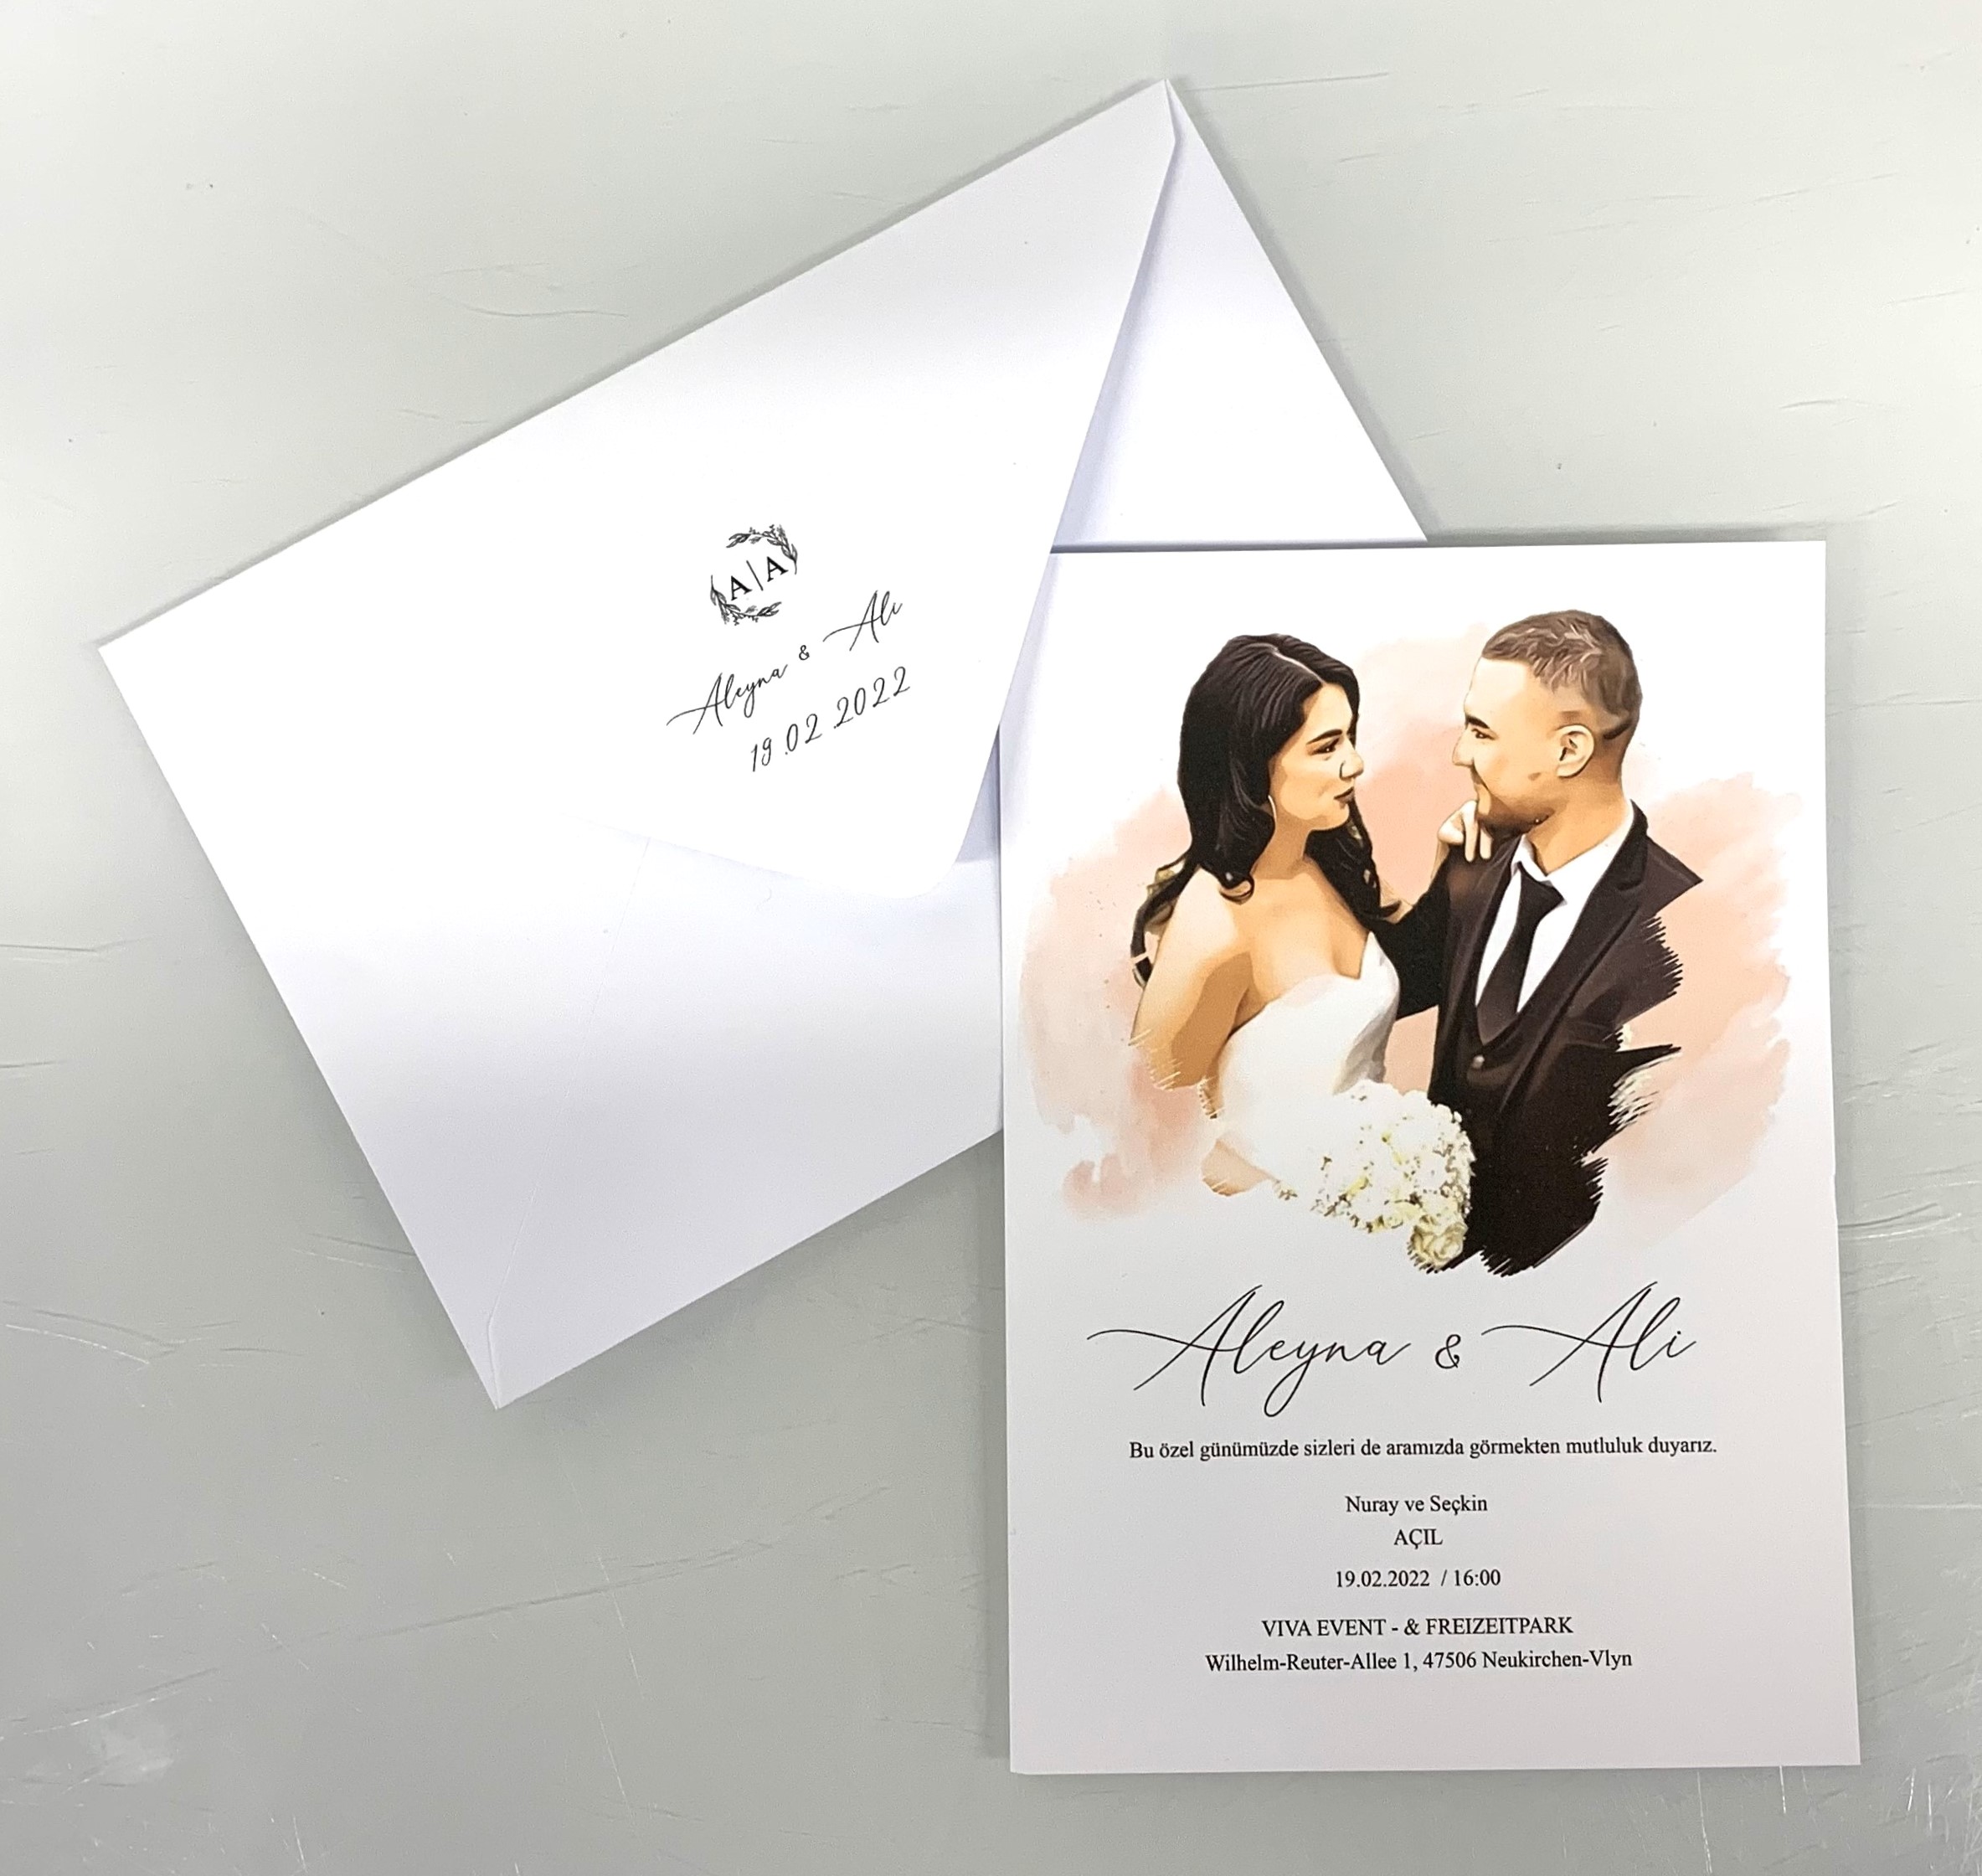  AB212 - Einladungskarte mit Foto /  resimli Davetiye - Hochzeit / Düğün - Verlobung / Nişan   